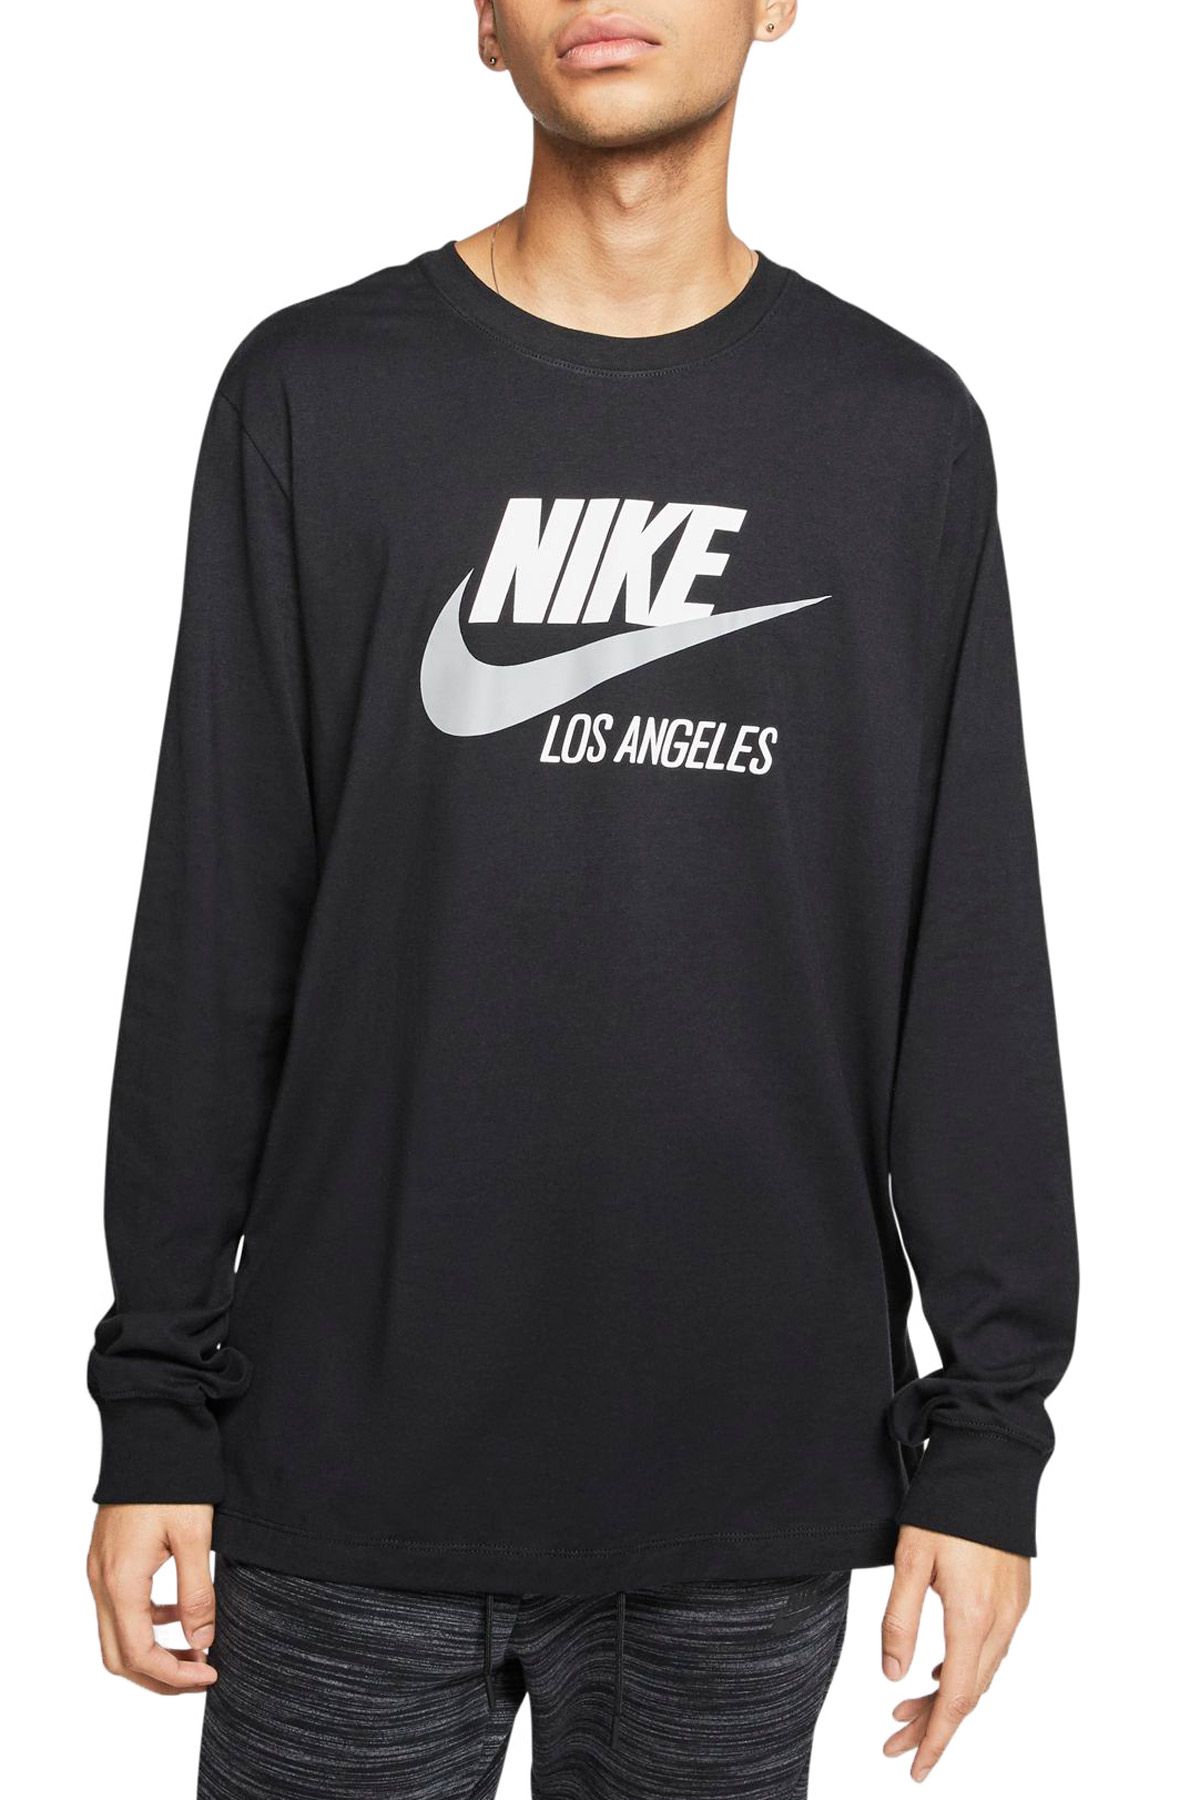 Adidas Los Angeles Lakers Basketball White 100% Cotton Logo T- Shirt  Men's XL